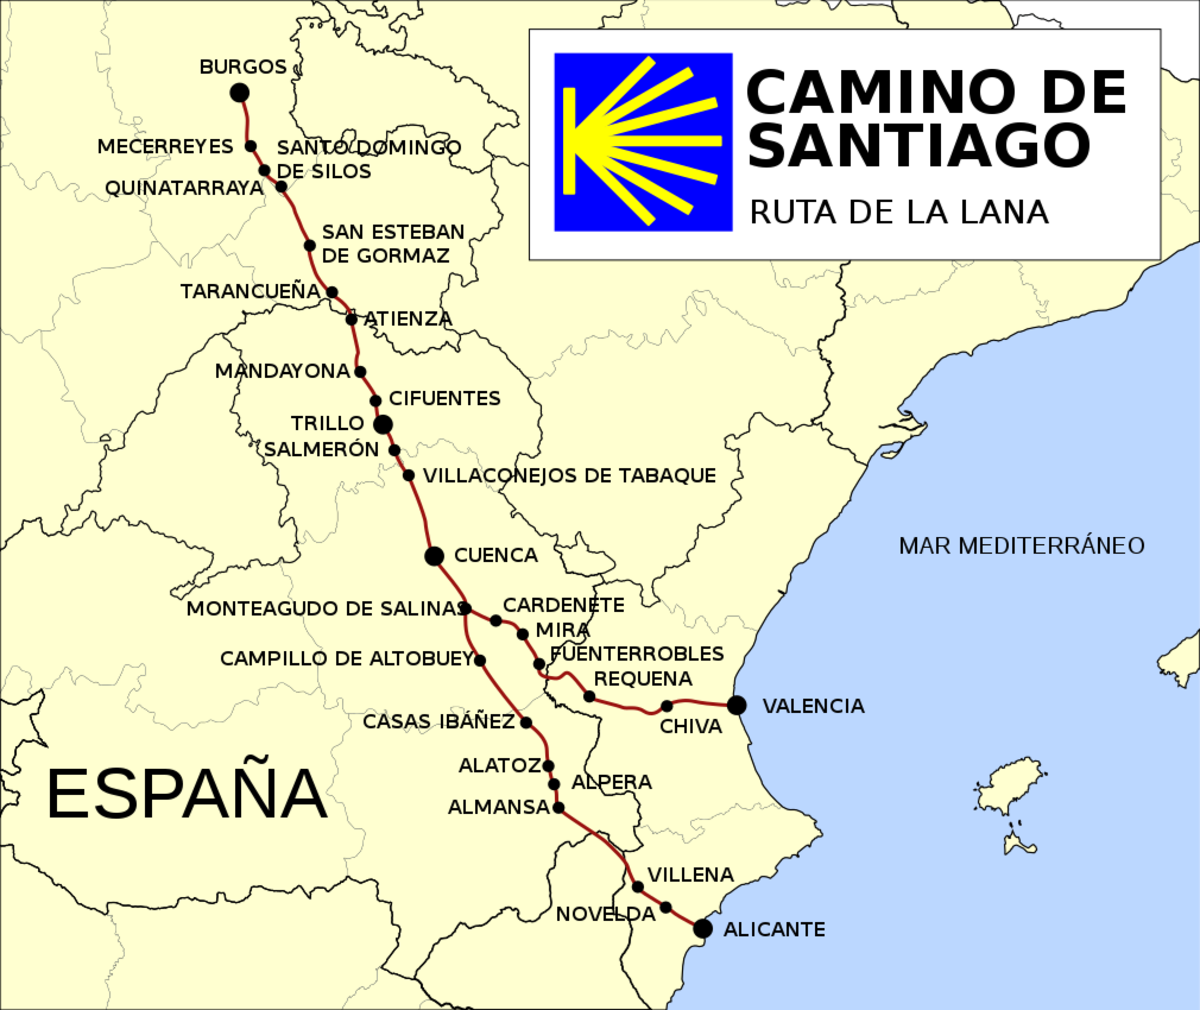 Packing List for the Camino de Santiago